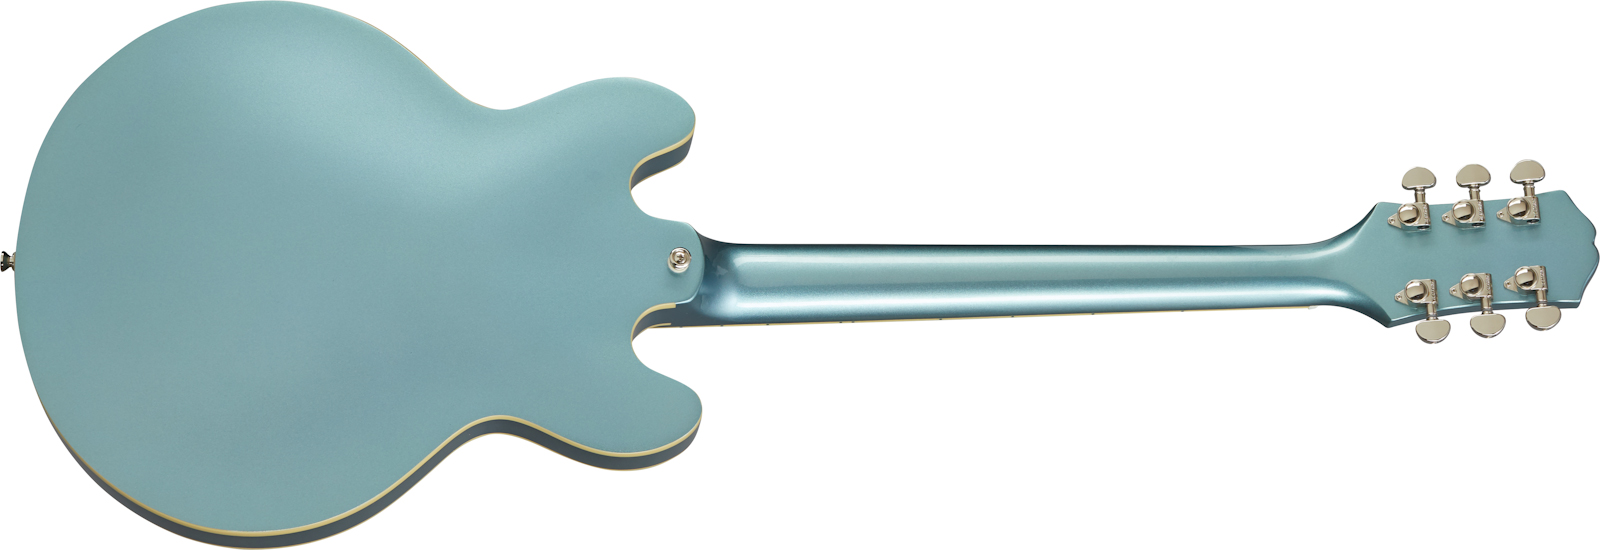 Epiphone Es-339 Inspired By Gibson 2020 2h Ht Rw - Pelham Blue - Guitarra eléctrica semi caja - Variation 1